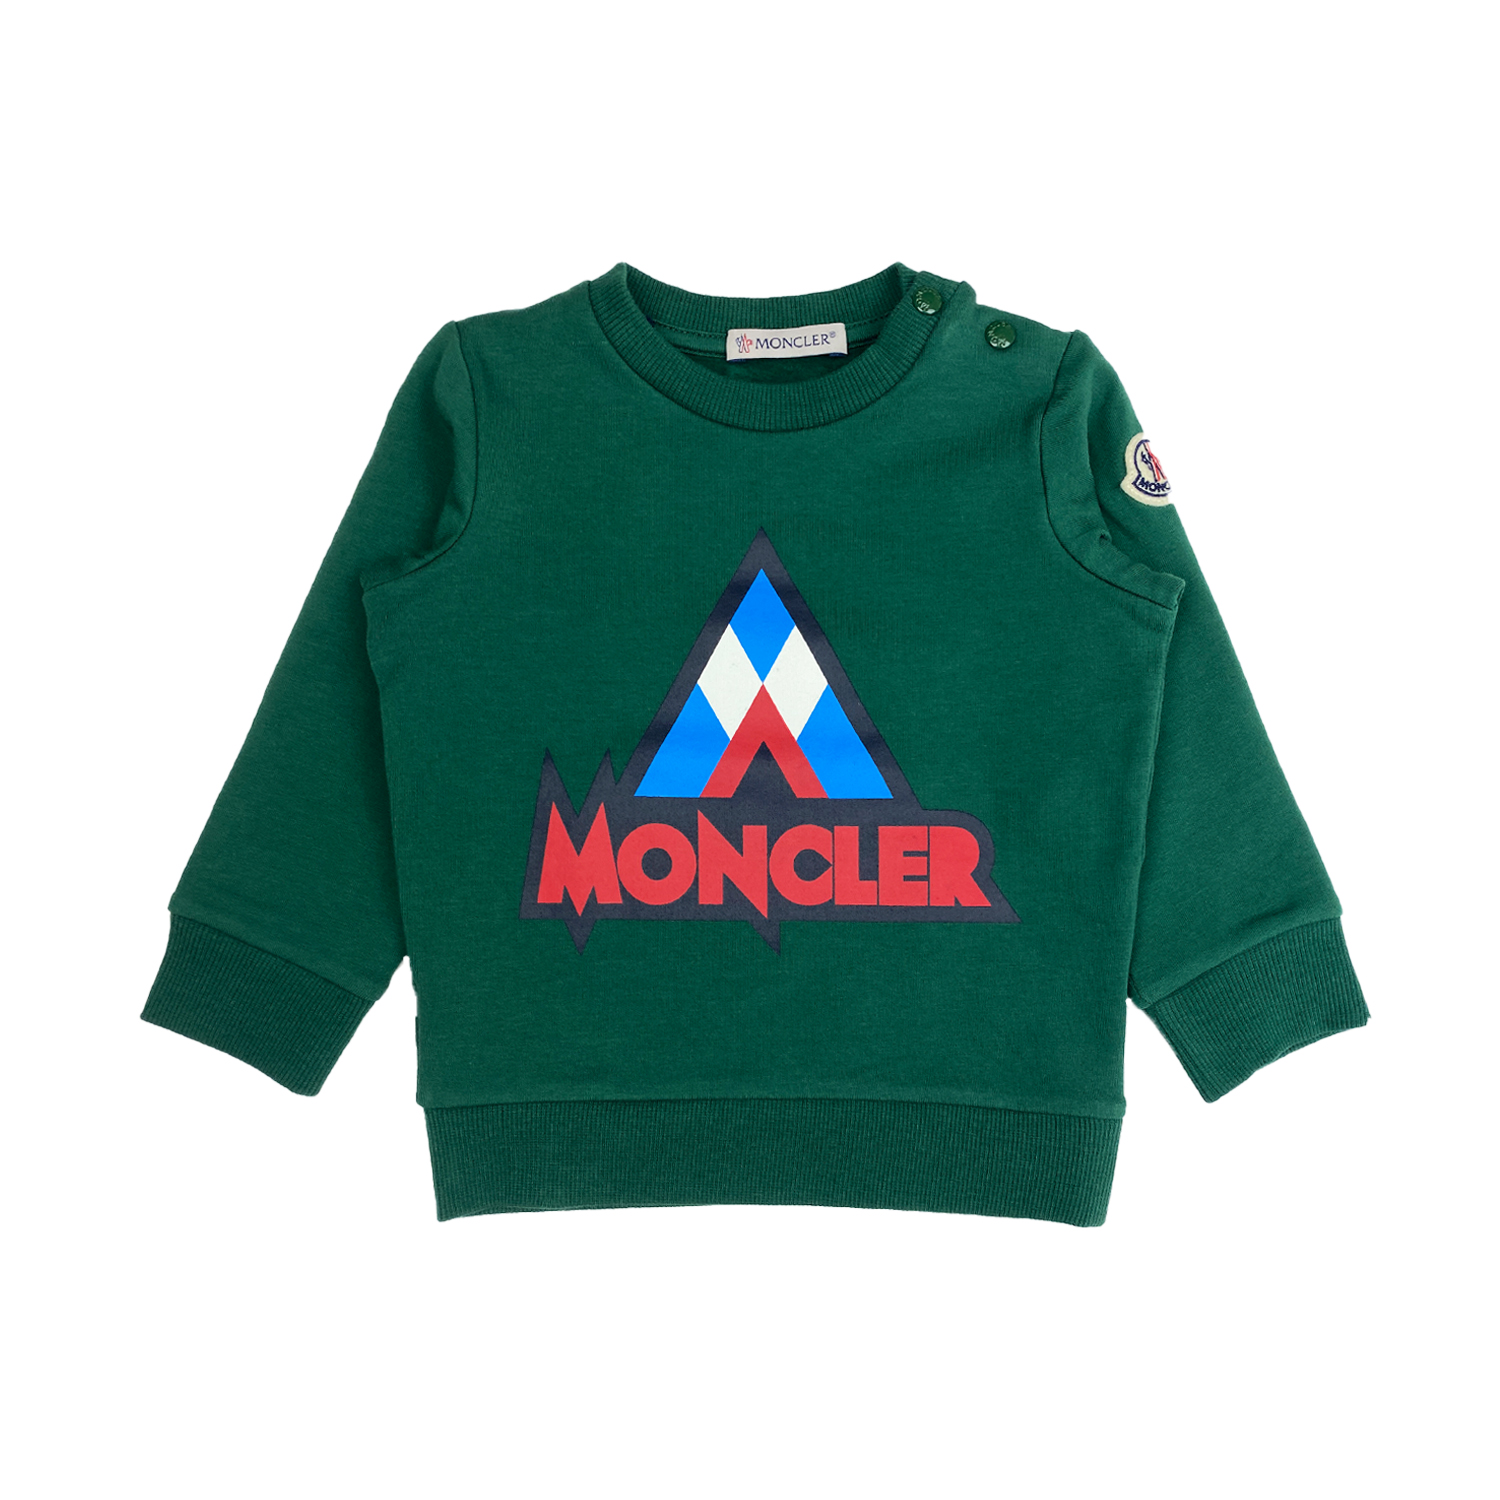 moncler sweater groen klein